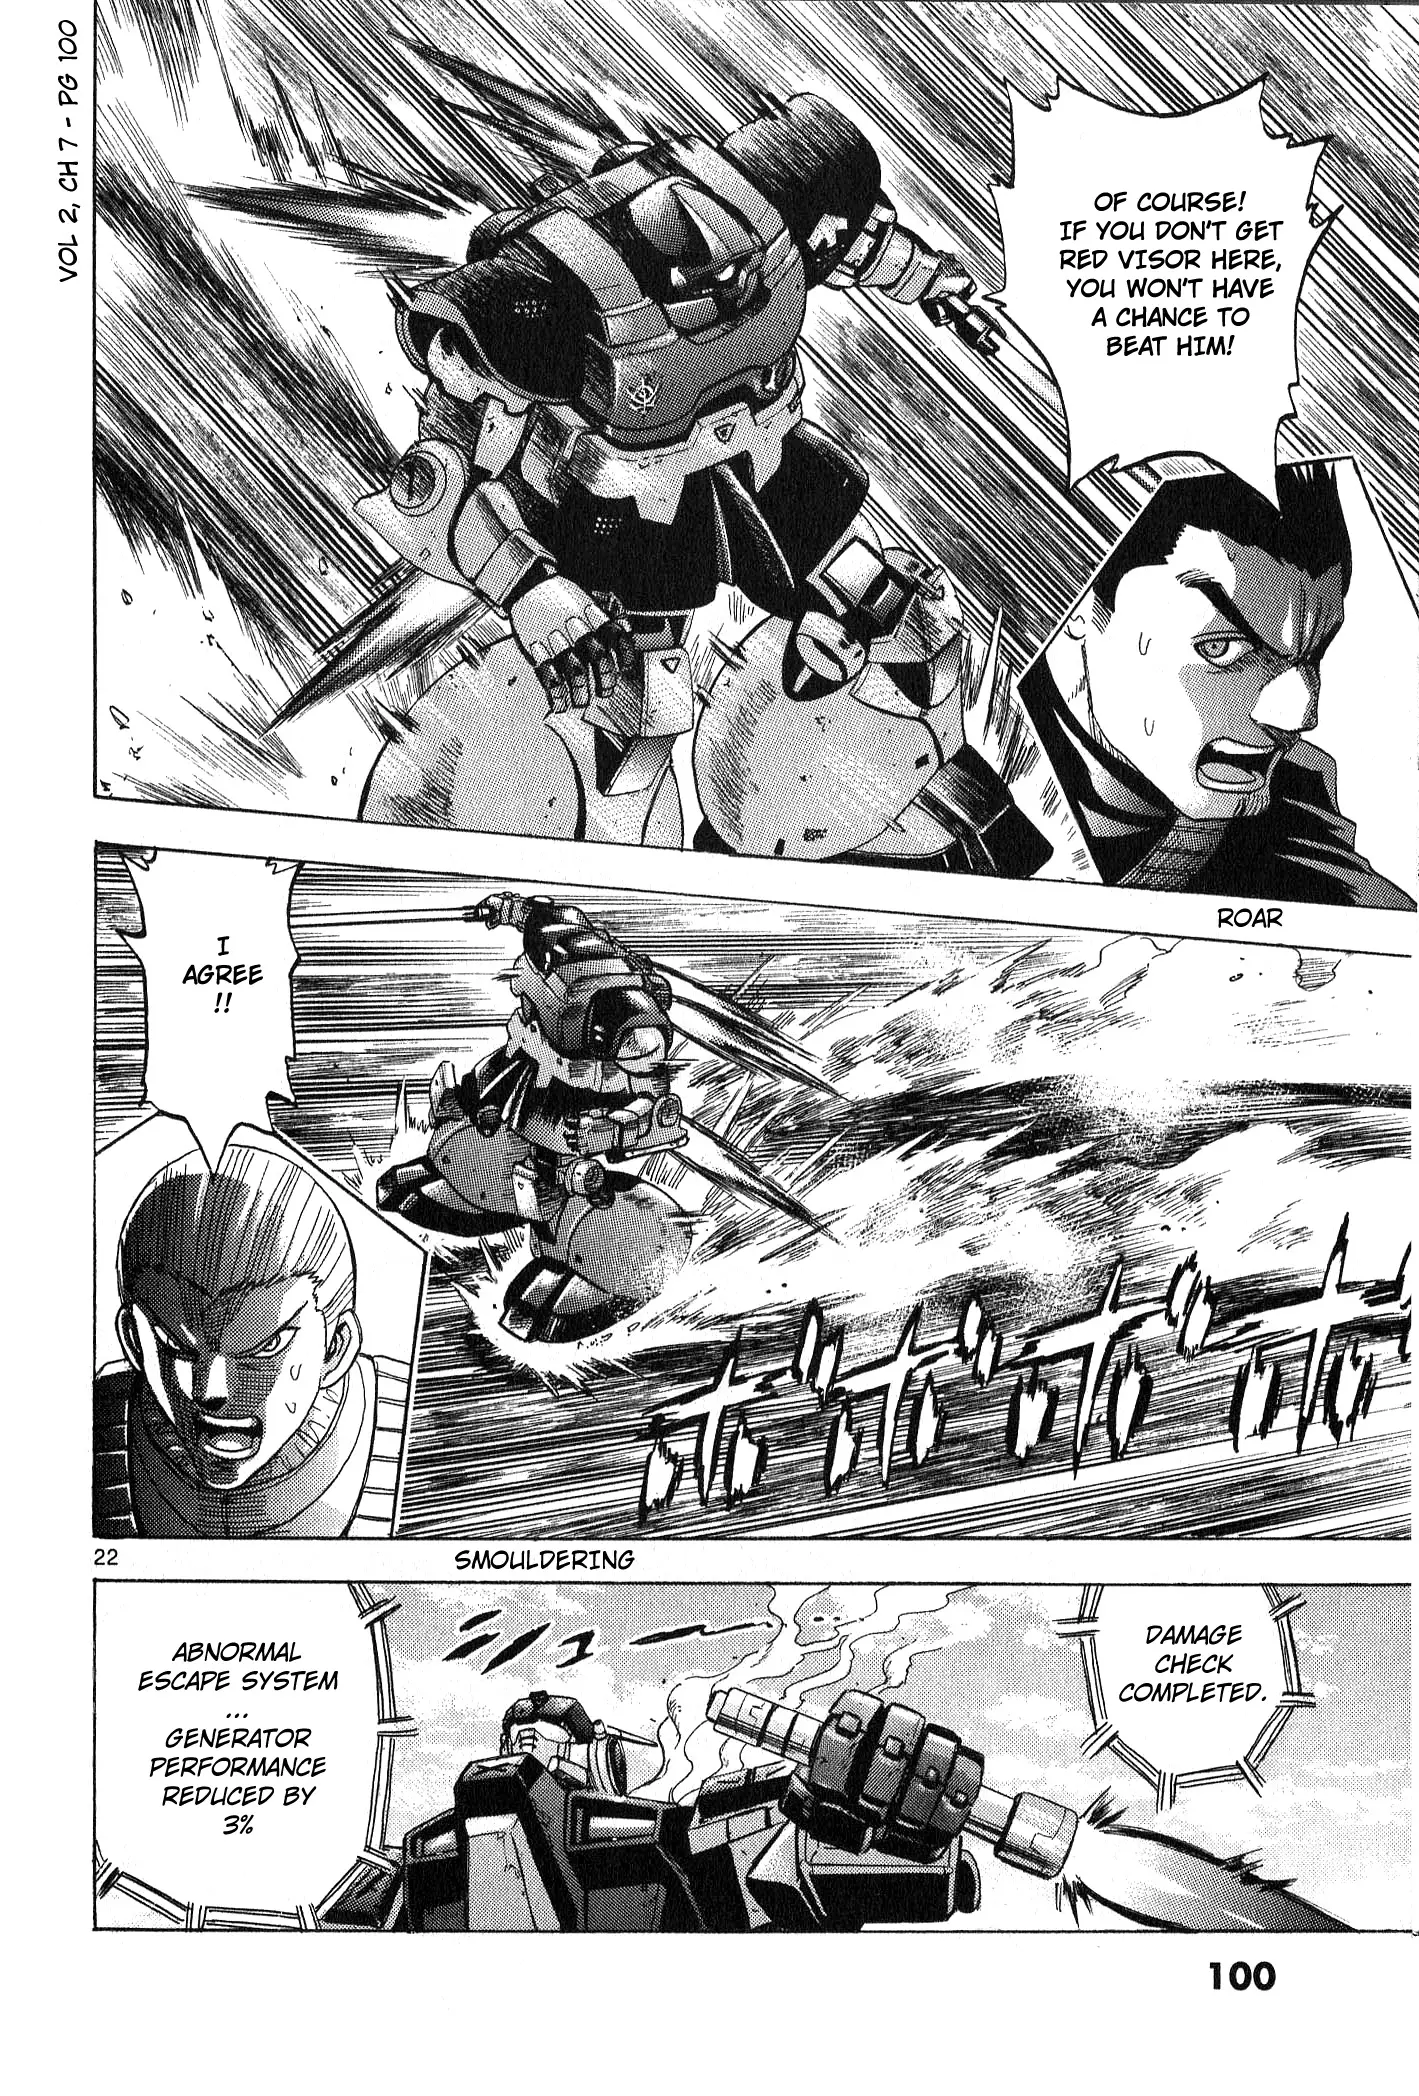 Mobile Suit Gundam Aggressor - 7 page 20-0dd29537